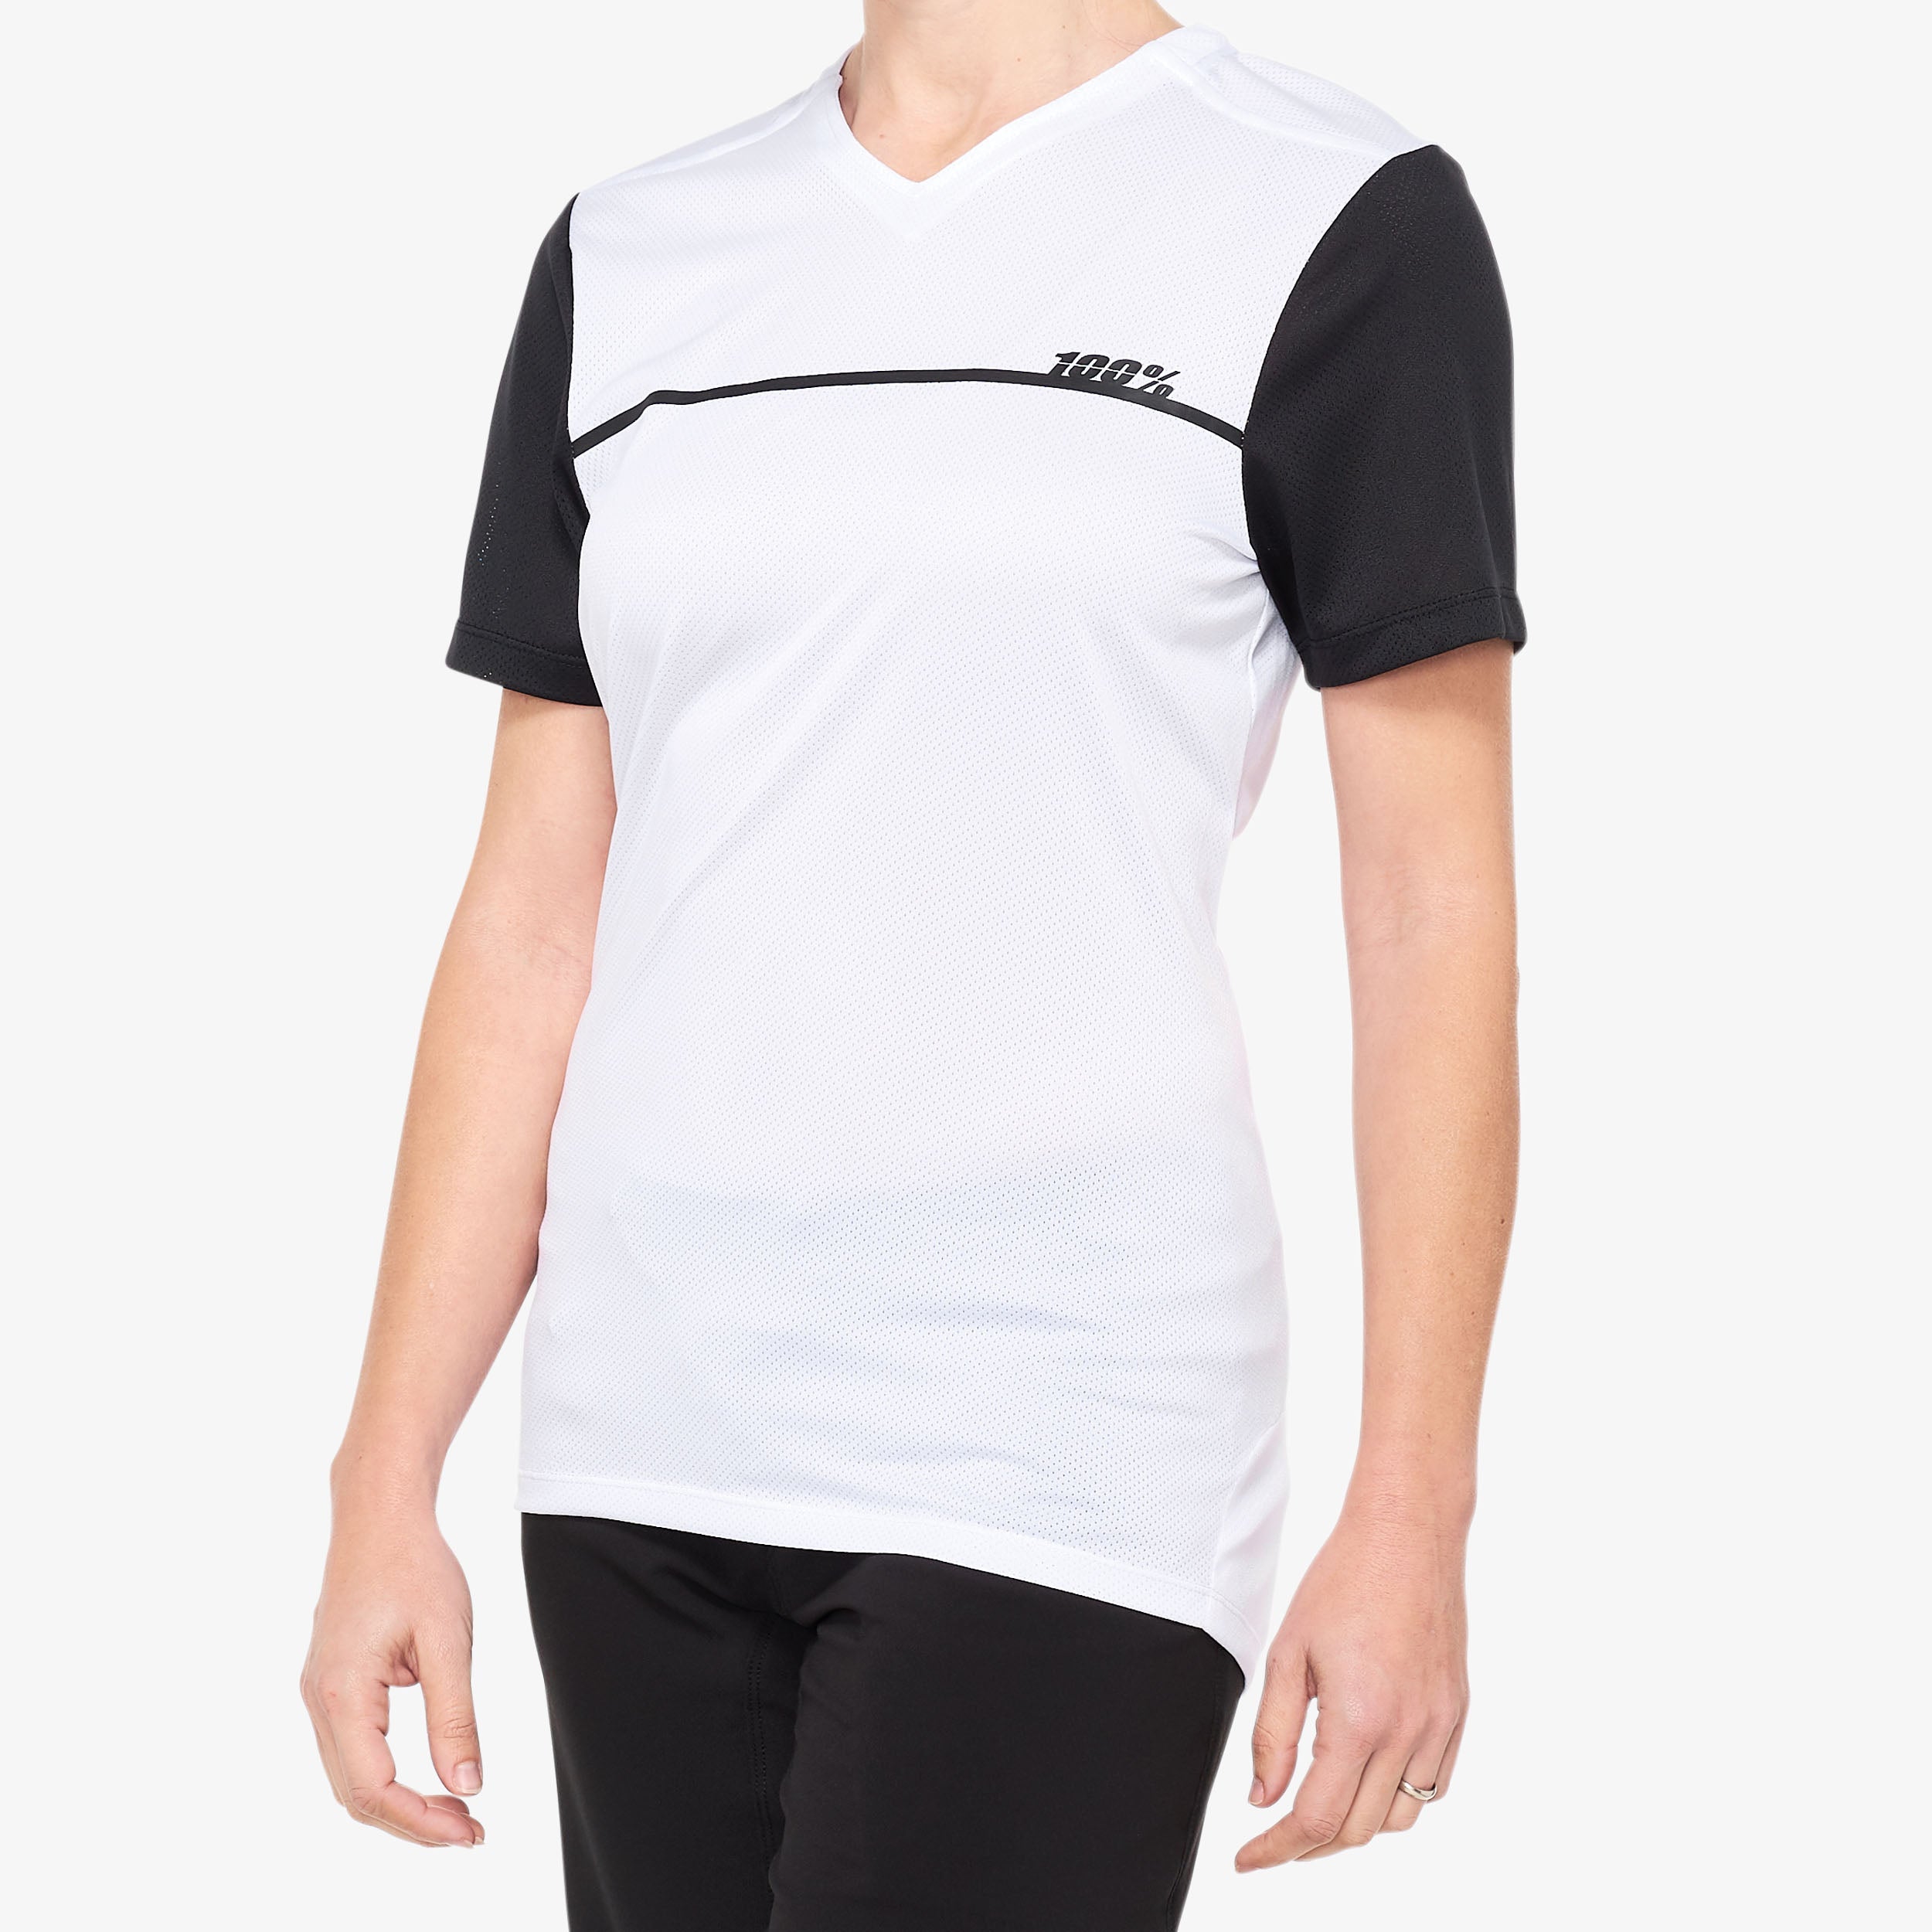 RIDECAMP Women's Short Sleeve Jersey White/Black